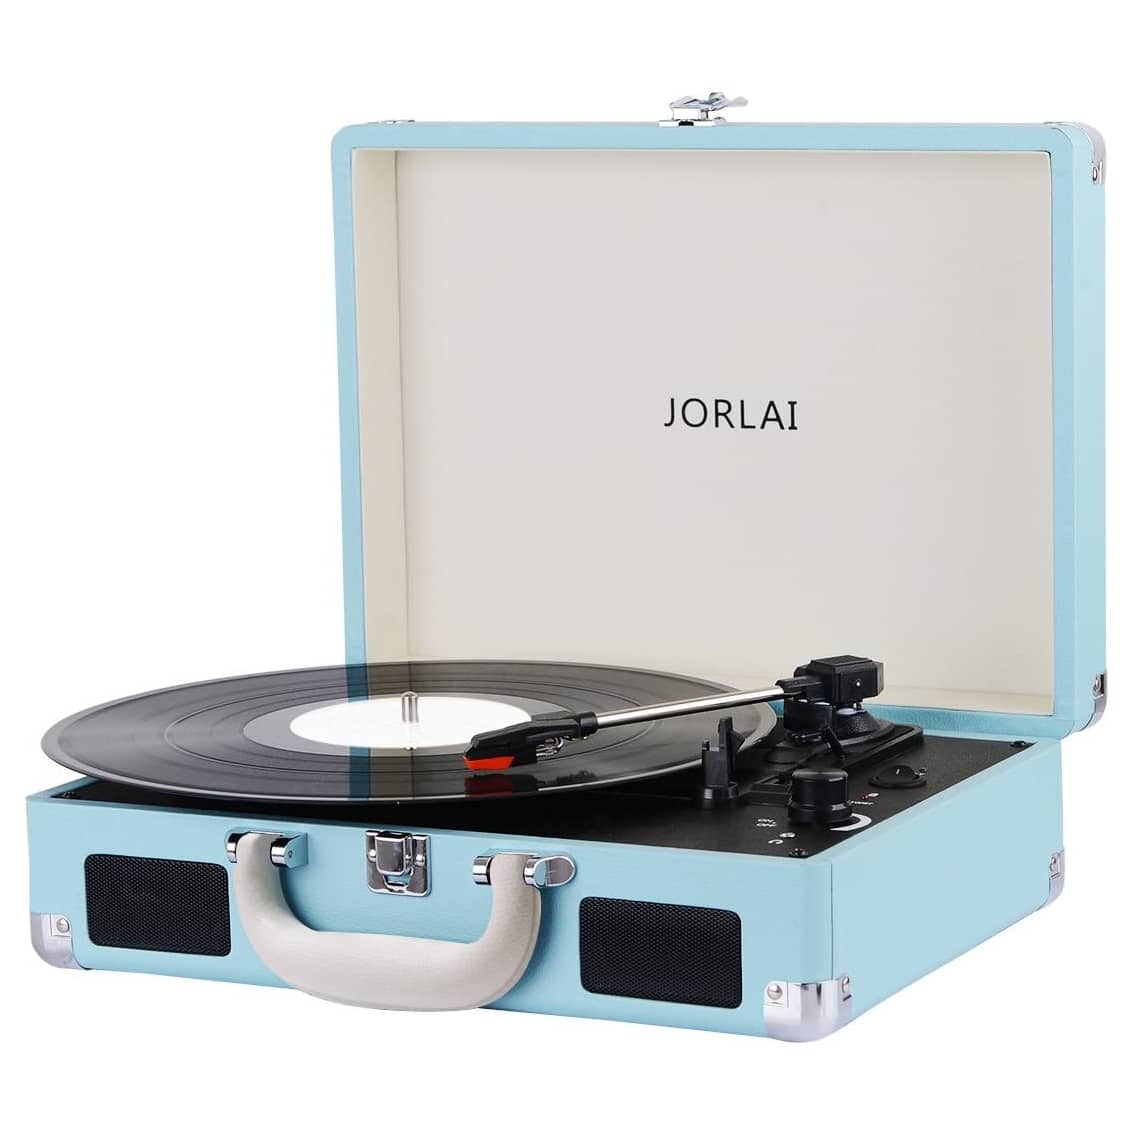 JORLAI Vinyl Record Player